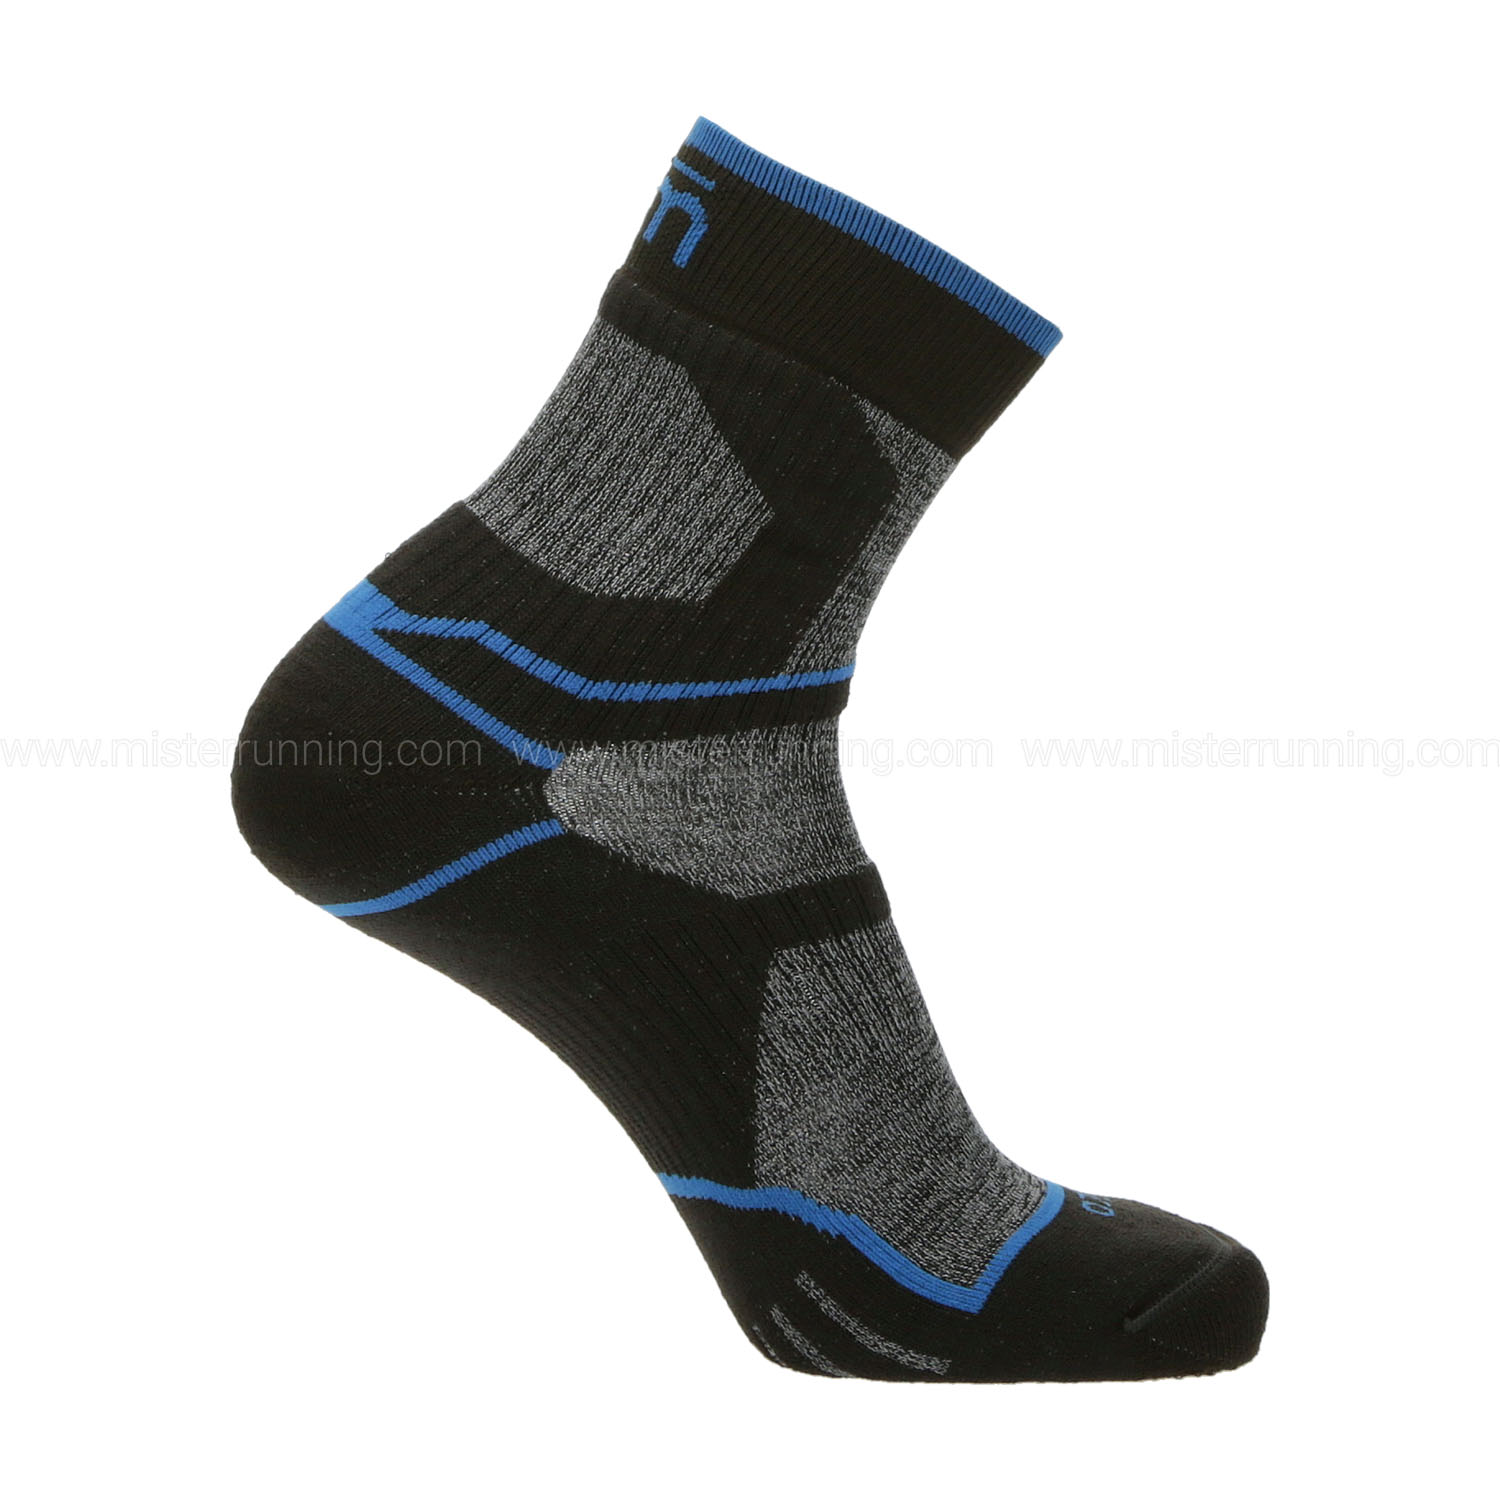 Mico Extra Dry Coolmax Medium Weight Socks - Antracite/Azzurro